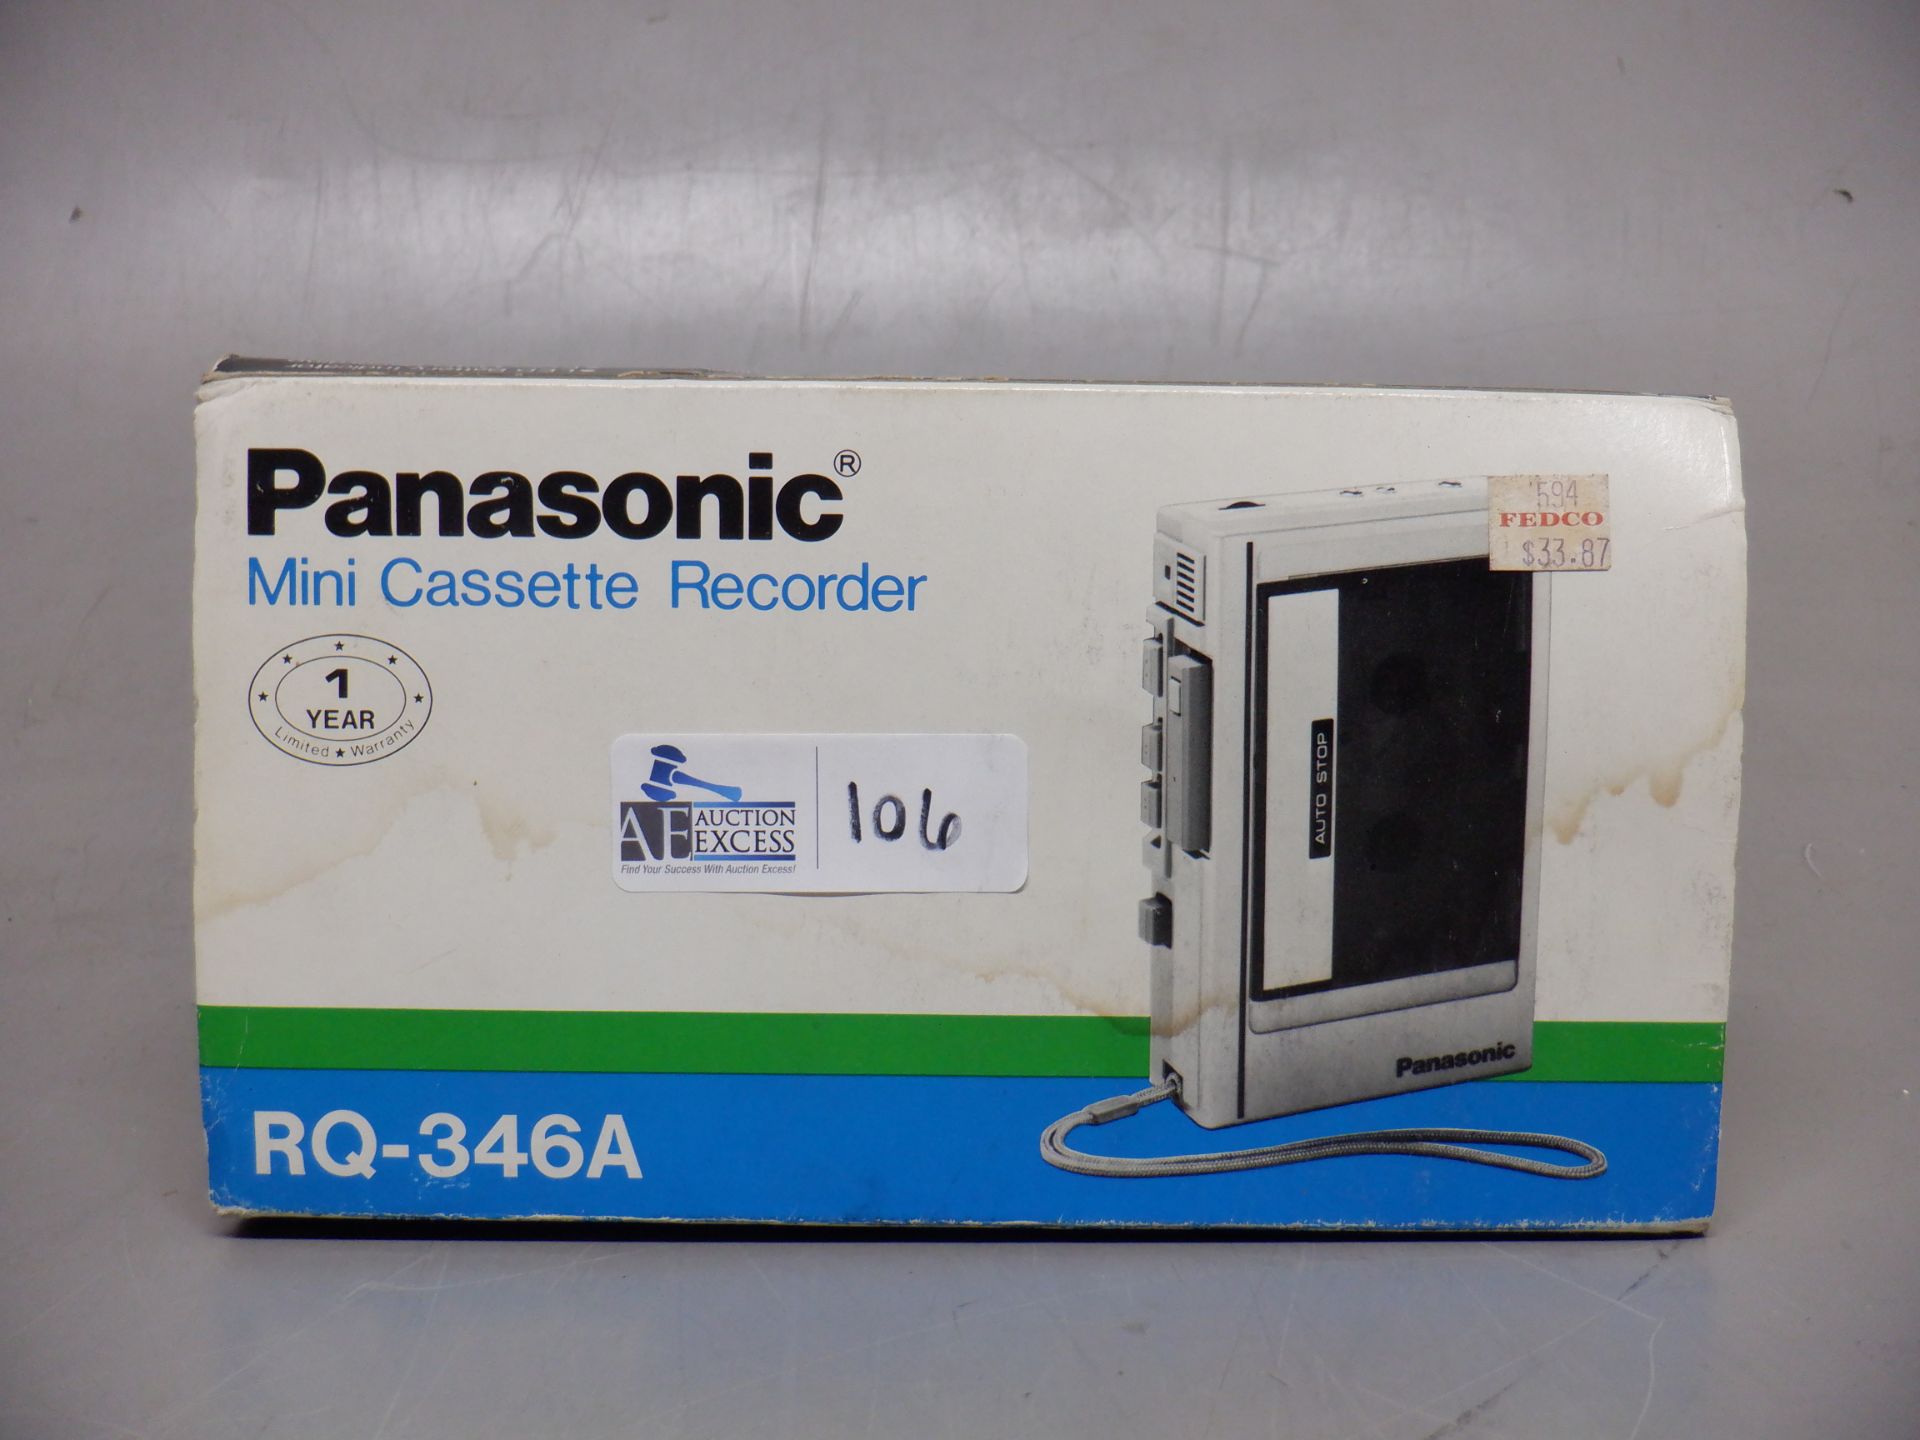 PANASONIC MINI CASSETTE RECORDER RQ-346A IN ORIGINAL BOX